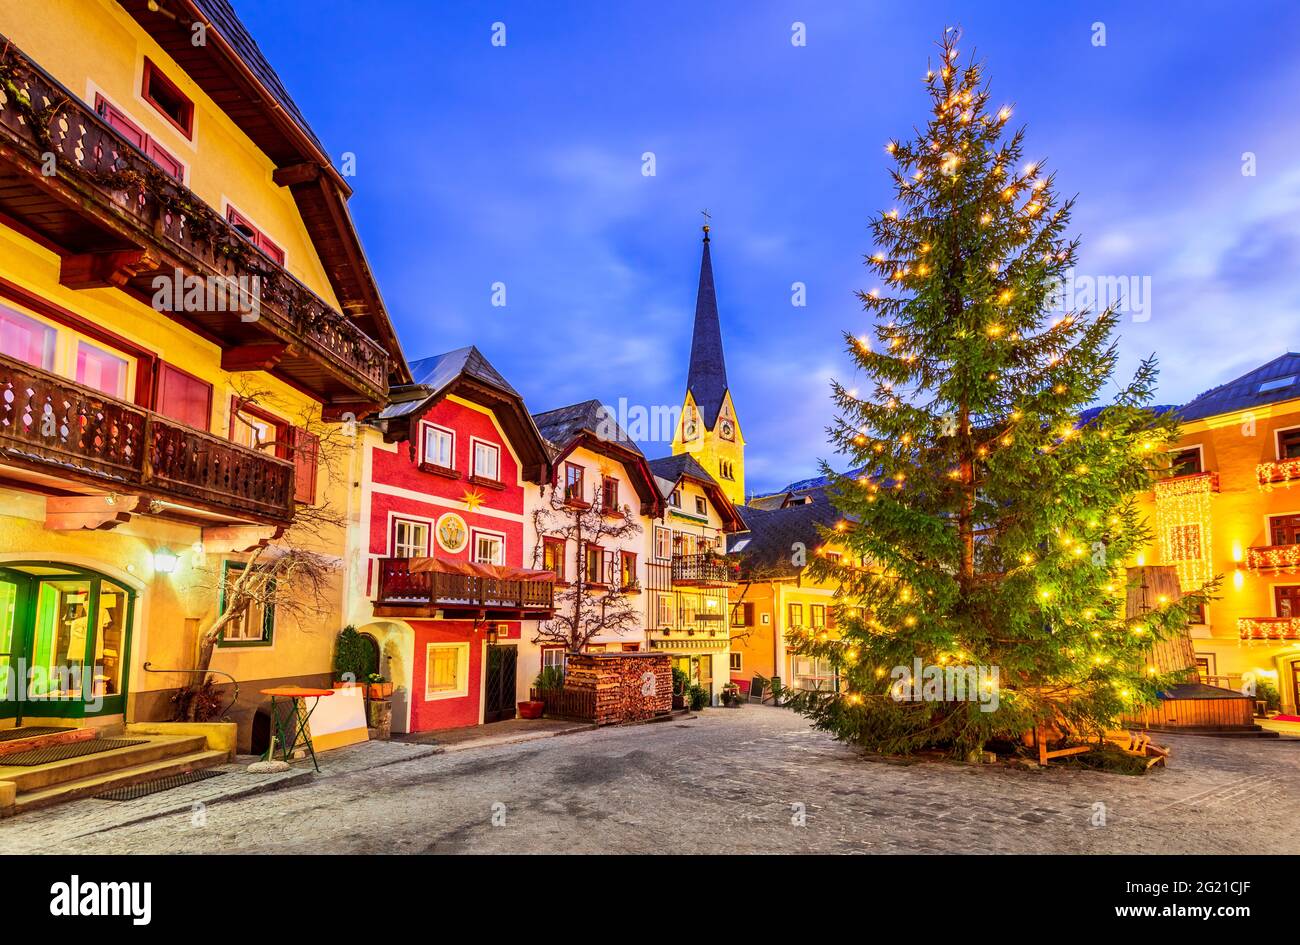 Hallstatt, Austria - Christmas tree in  Marktplatz Hallstatt scenic village in Upper Austria, Austrian Alps. Stock Photo